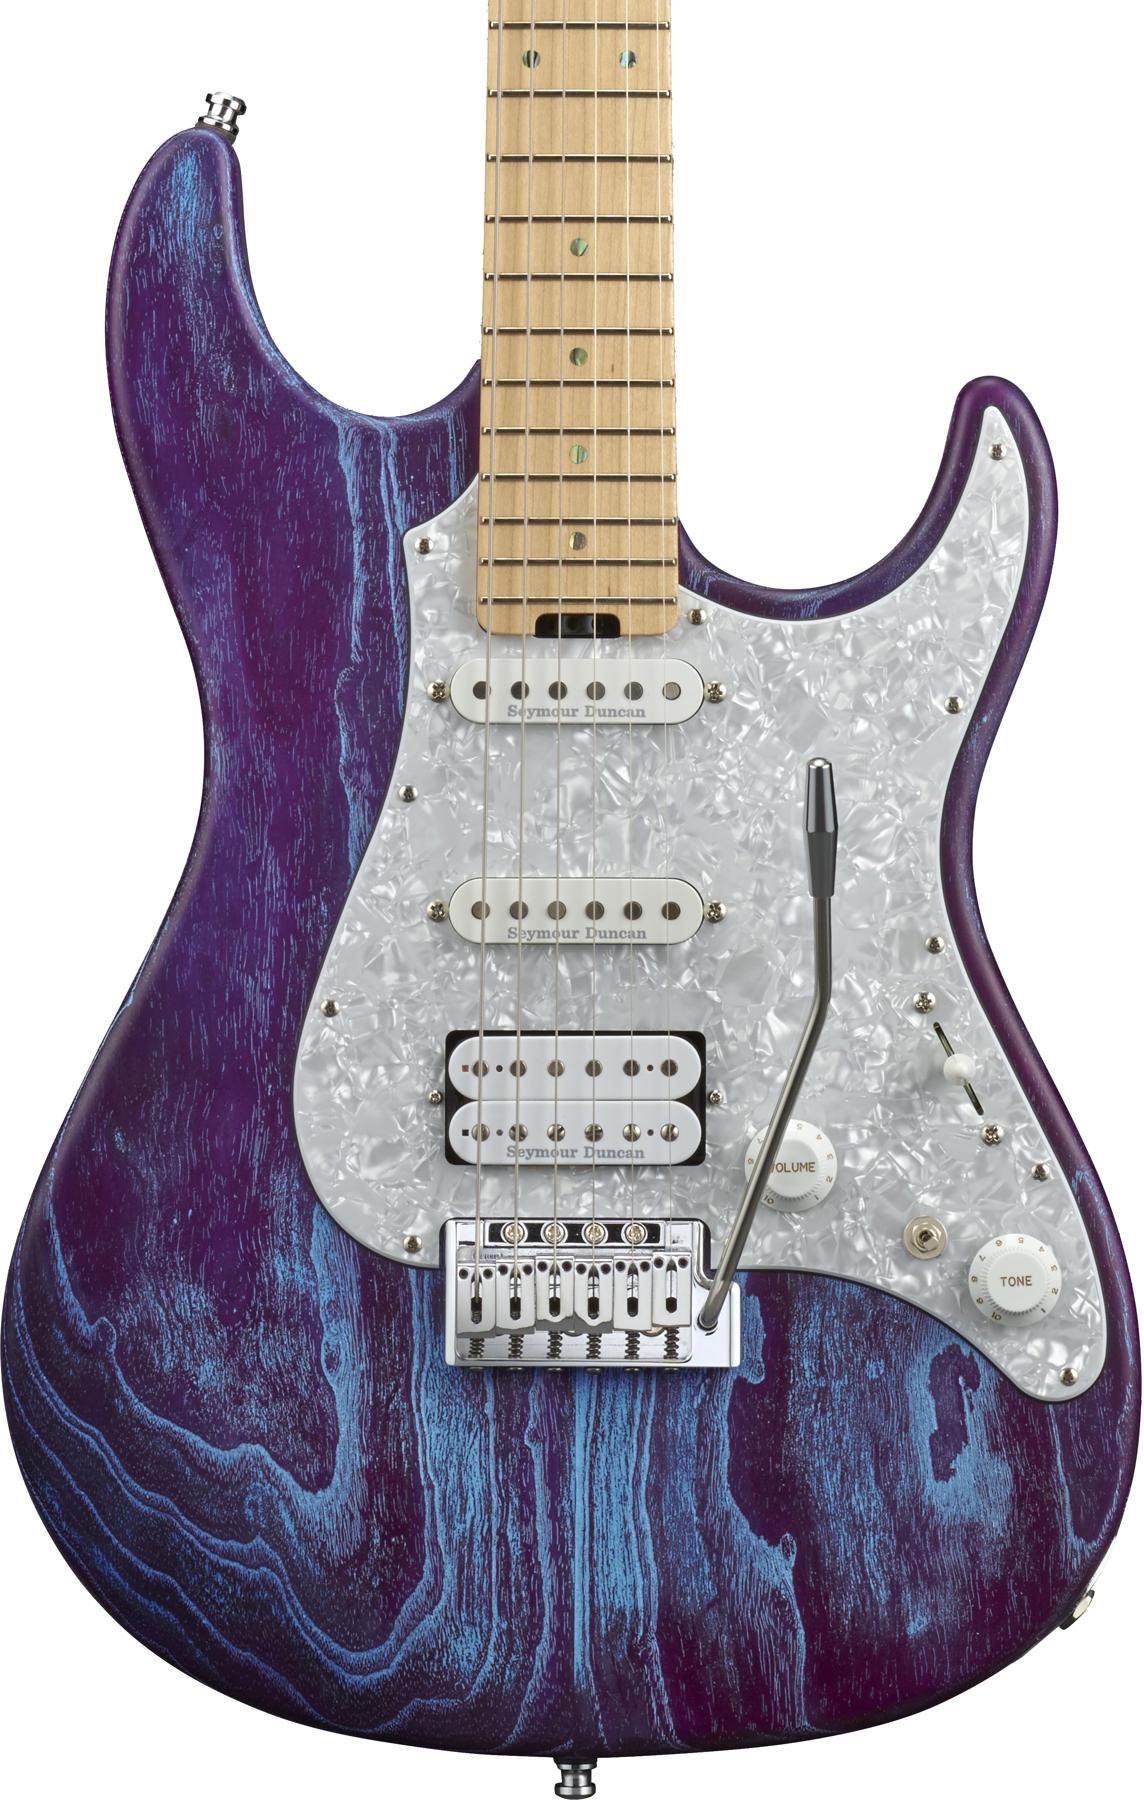 ESP Original Snapper CTM Electric Guitar - Drift Wood Indigo Purple with  Maple Fingerboard